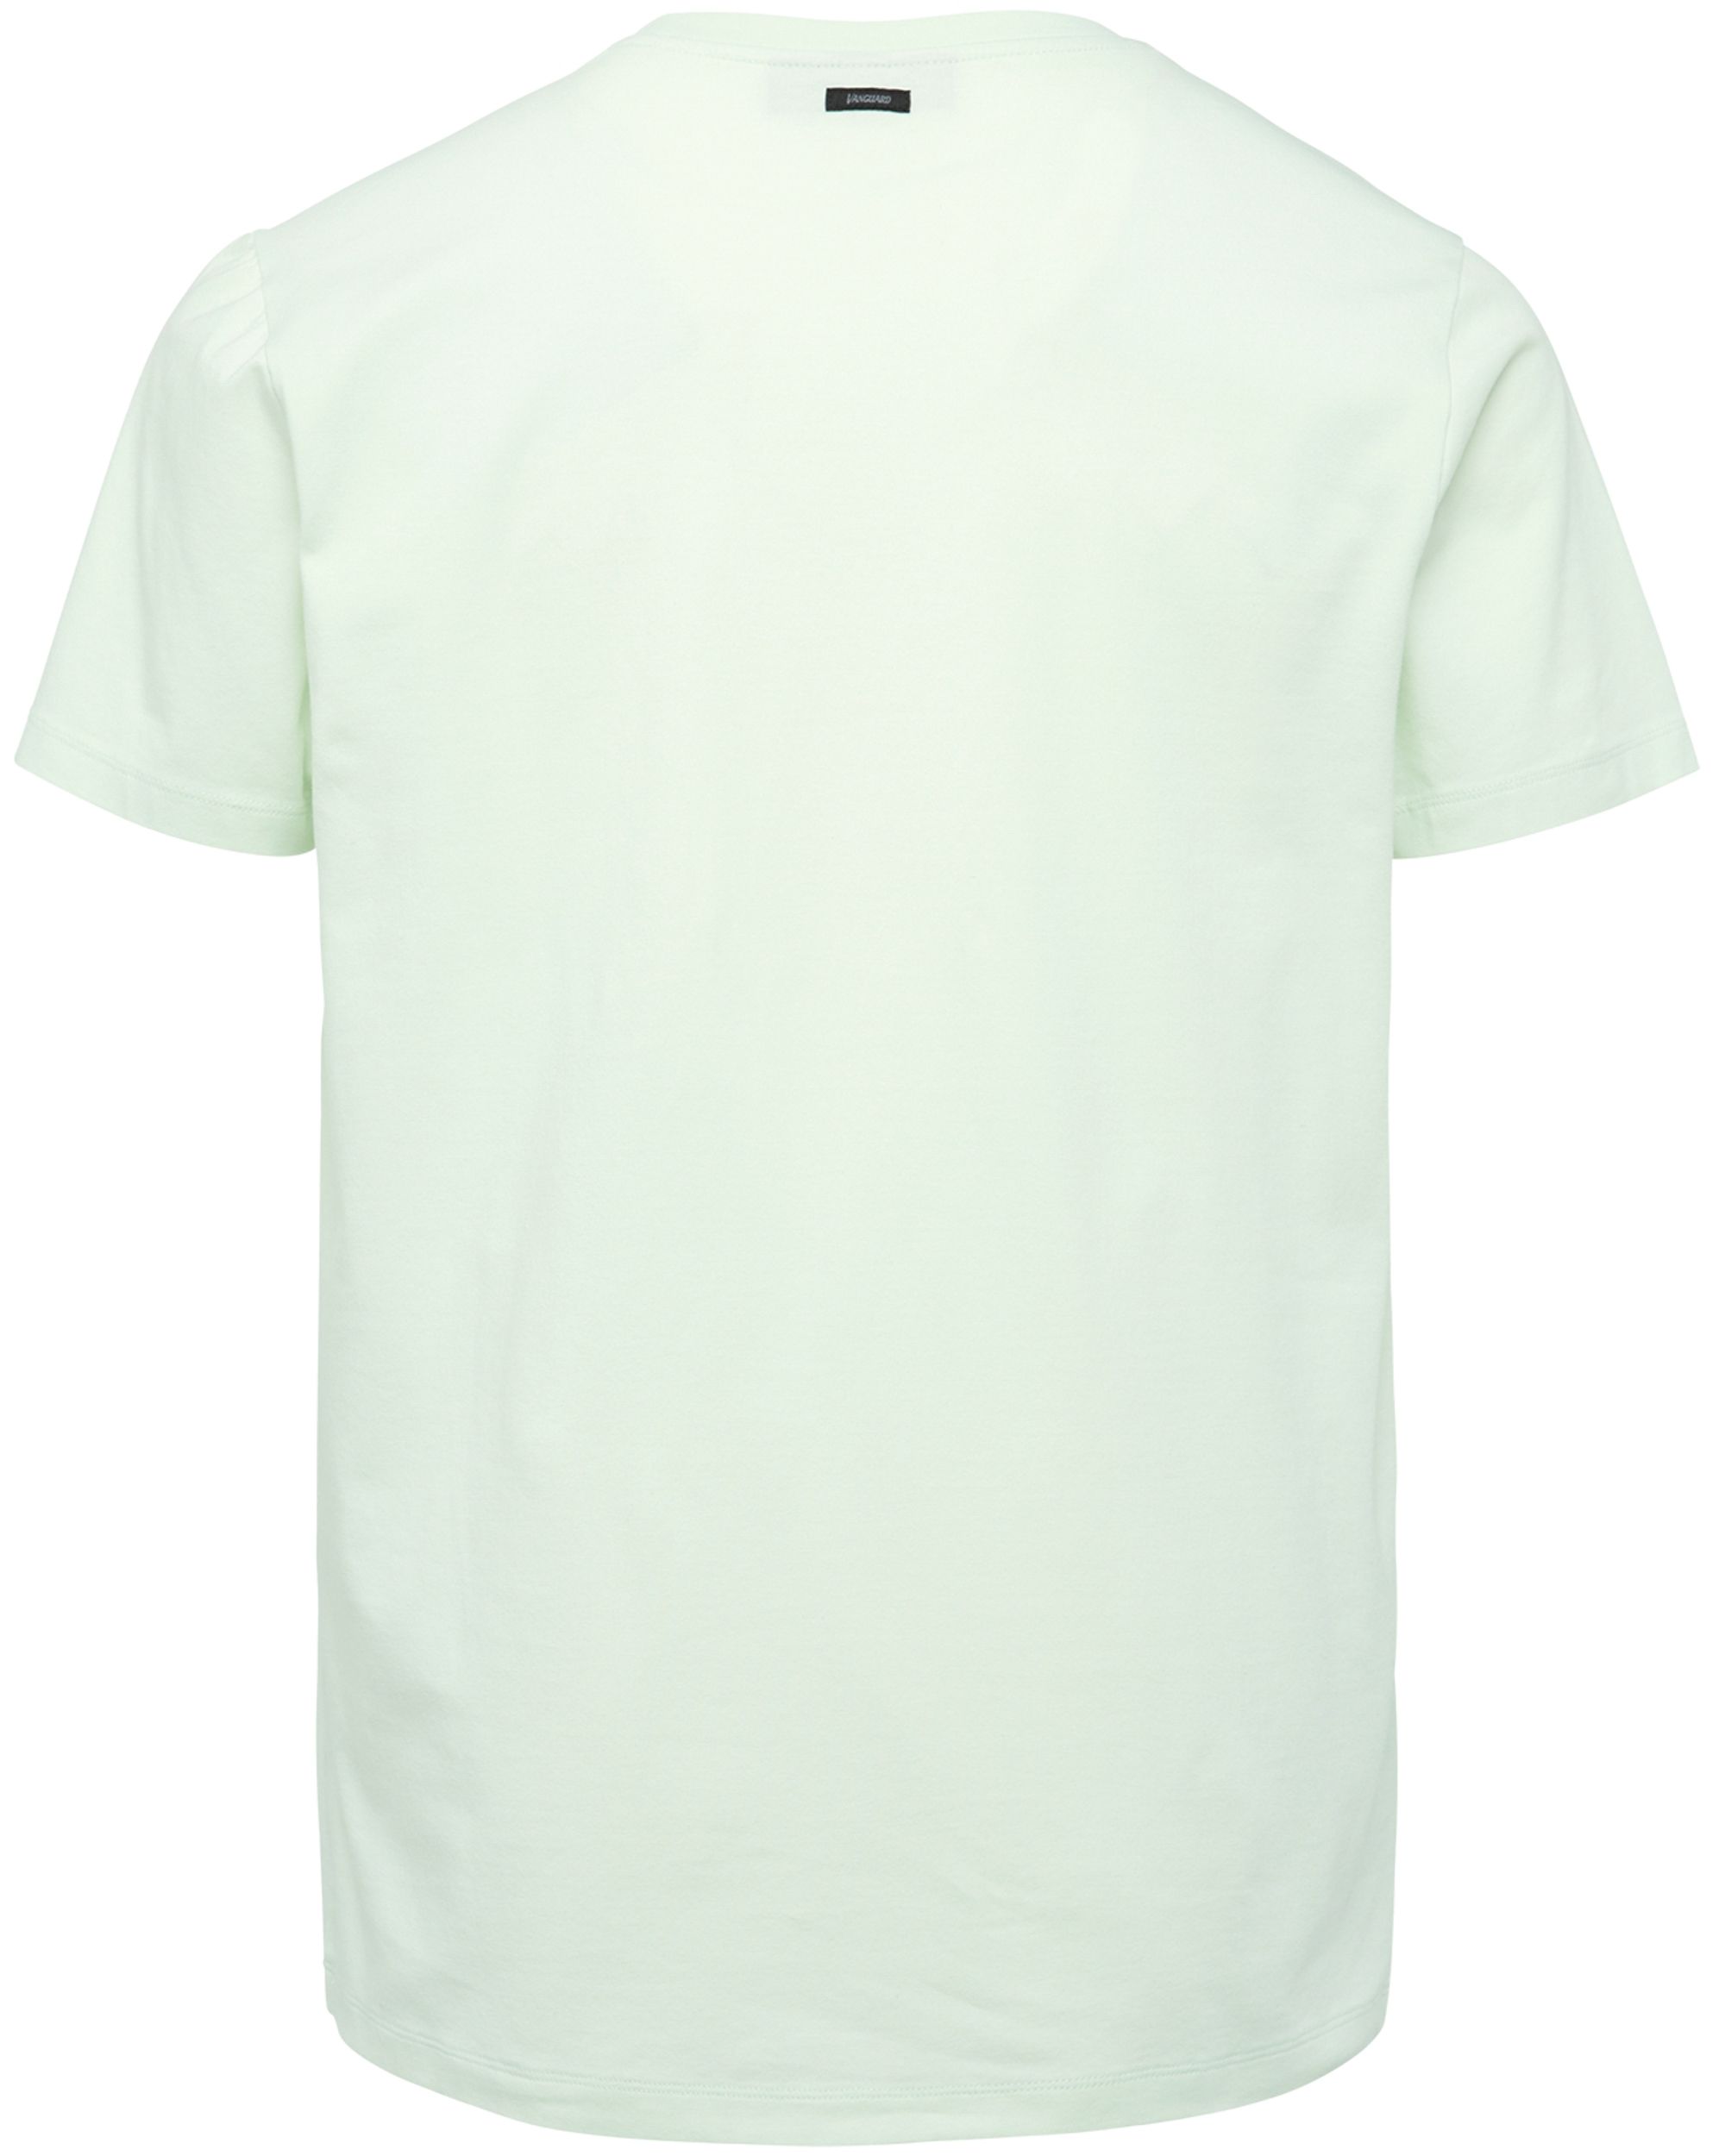 Vanguard T-shirt KM Groen 080085-001-L